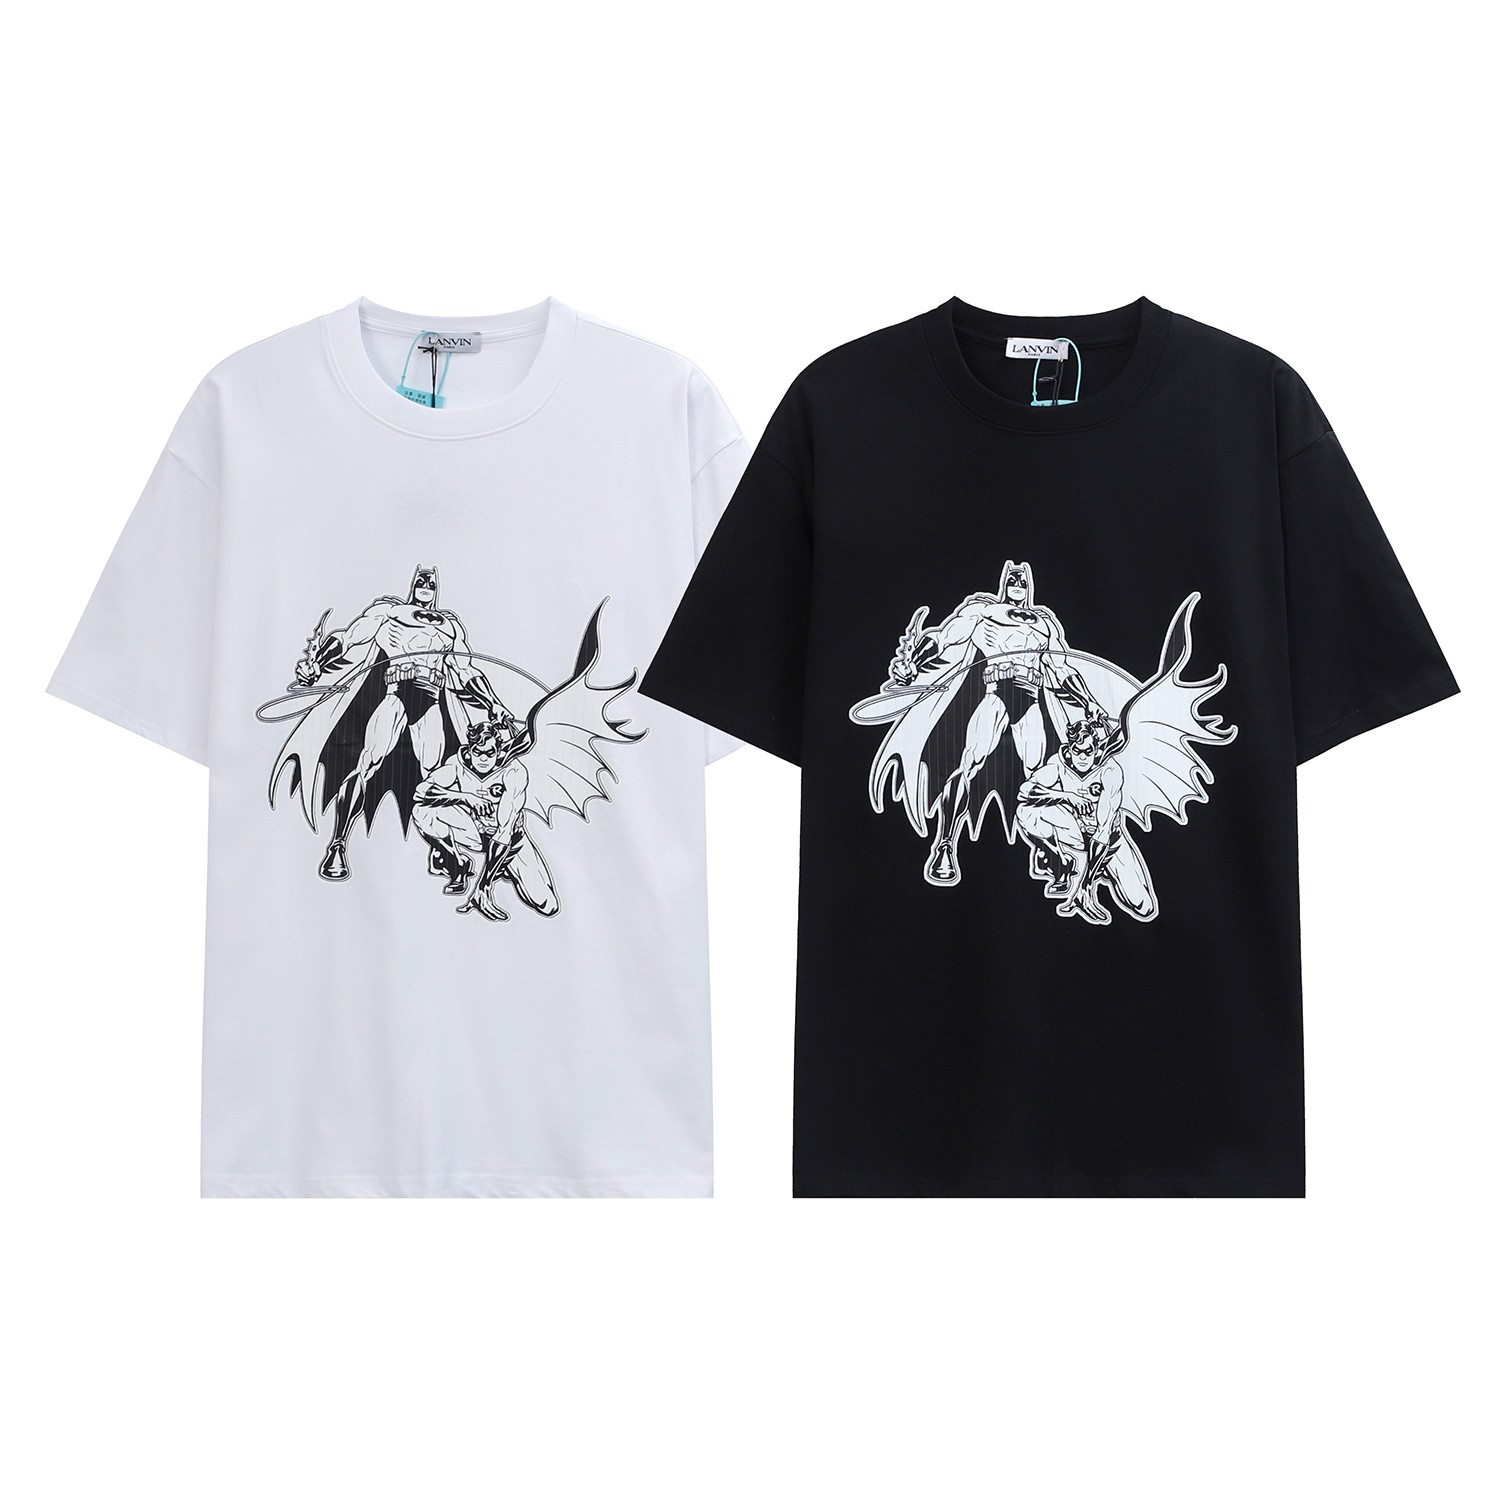 Lanvin Clothing T-Shirt Black White Printing Men Casual